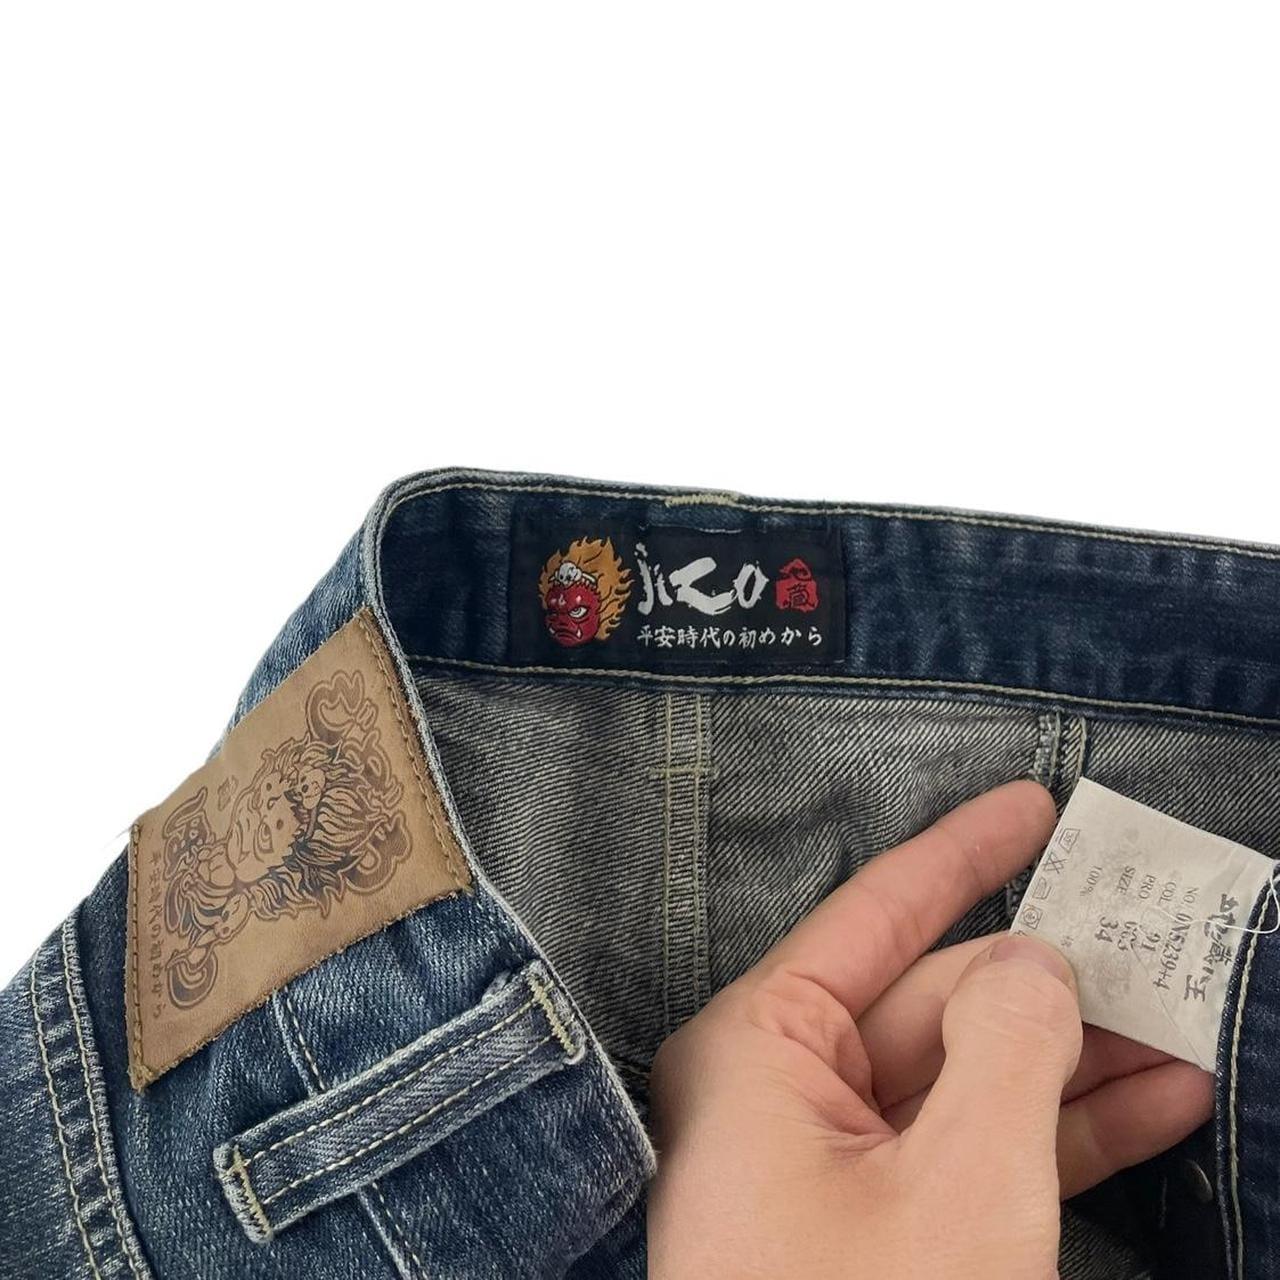 Vintage Jizo Japanese denim jeans trousers W34 - Known Source